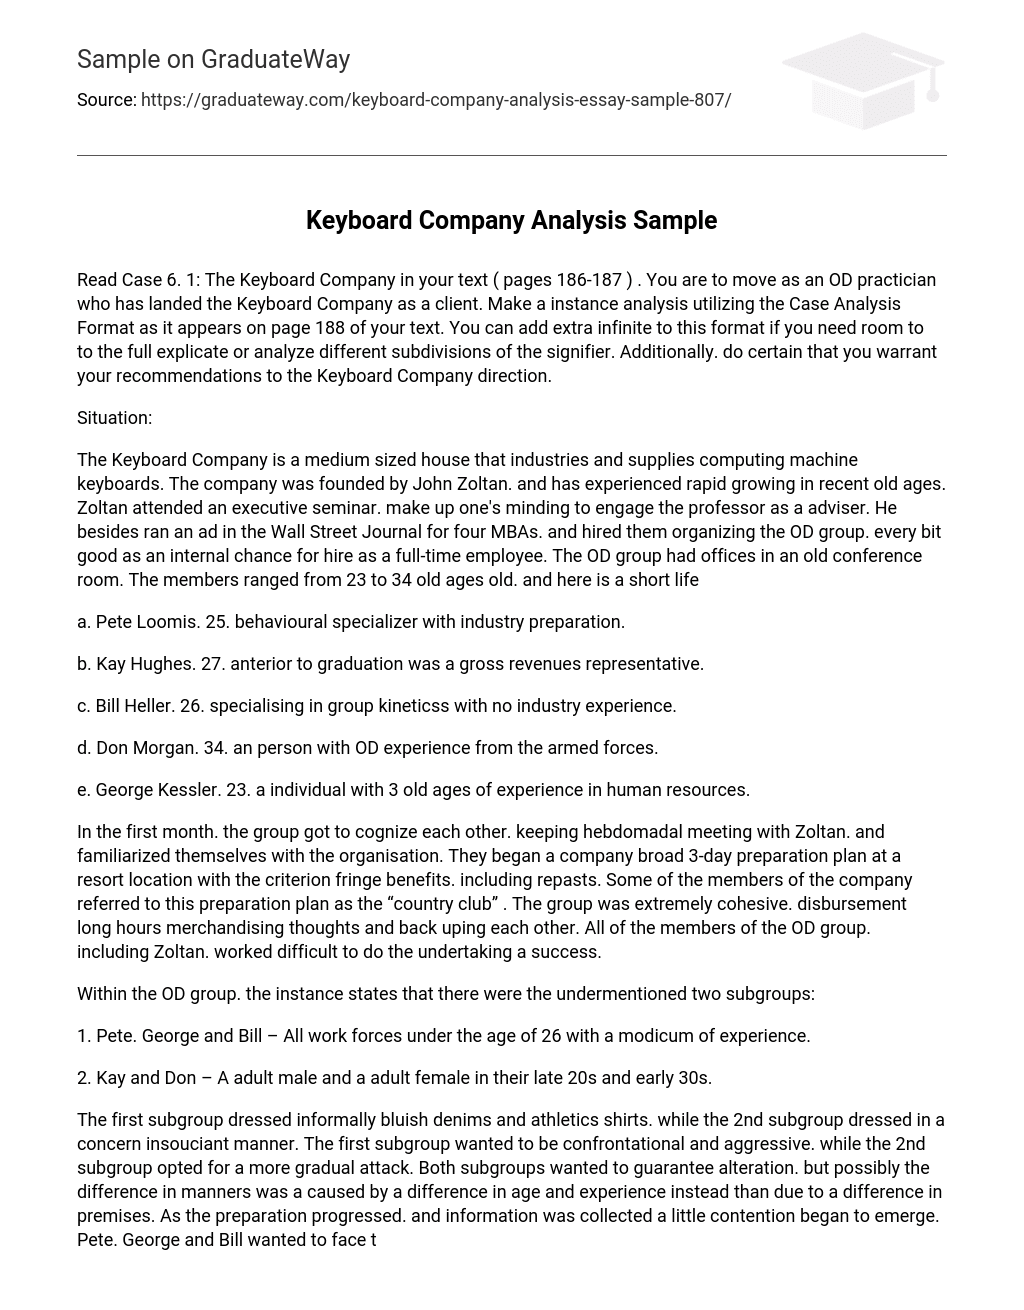 Keyboard Company Analysis Sample